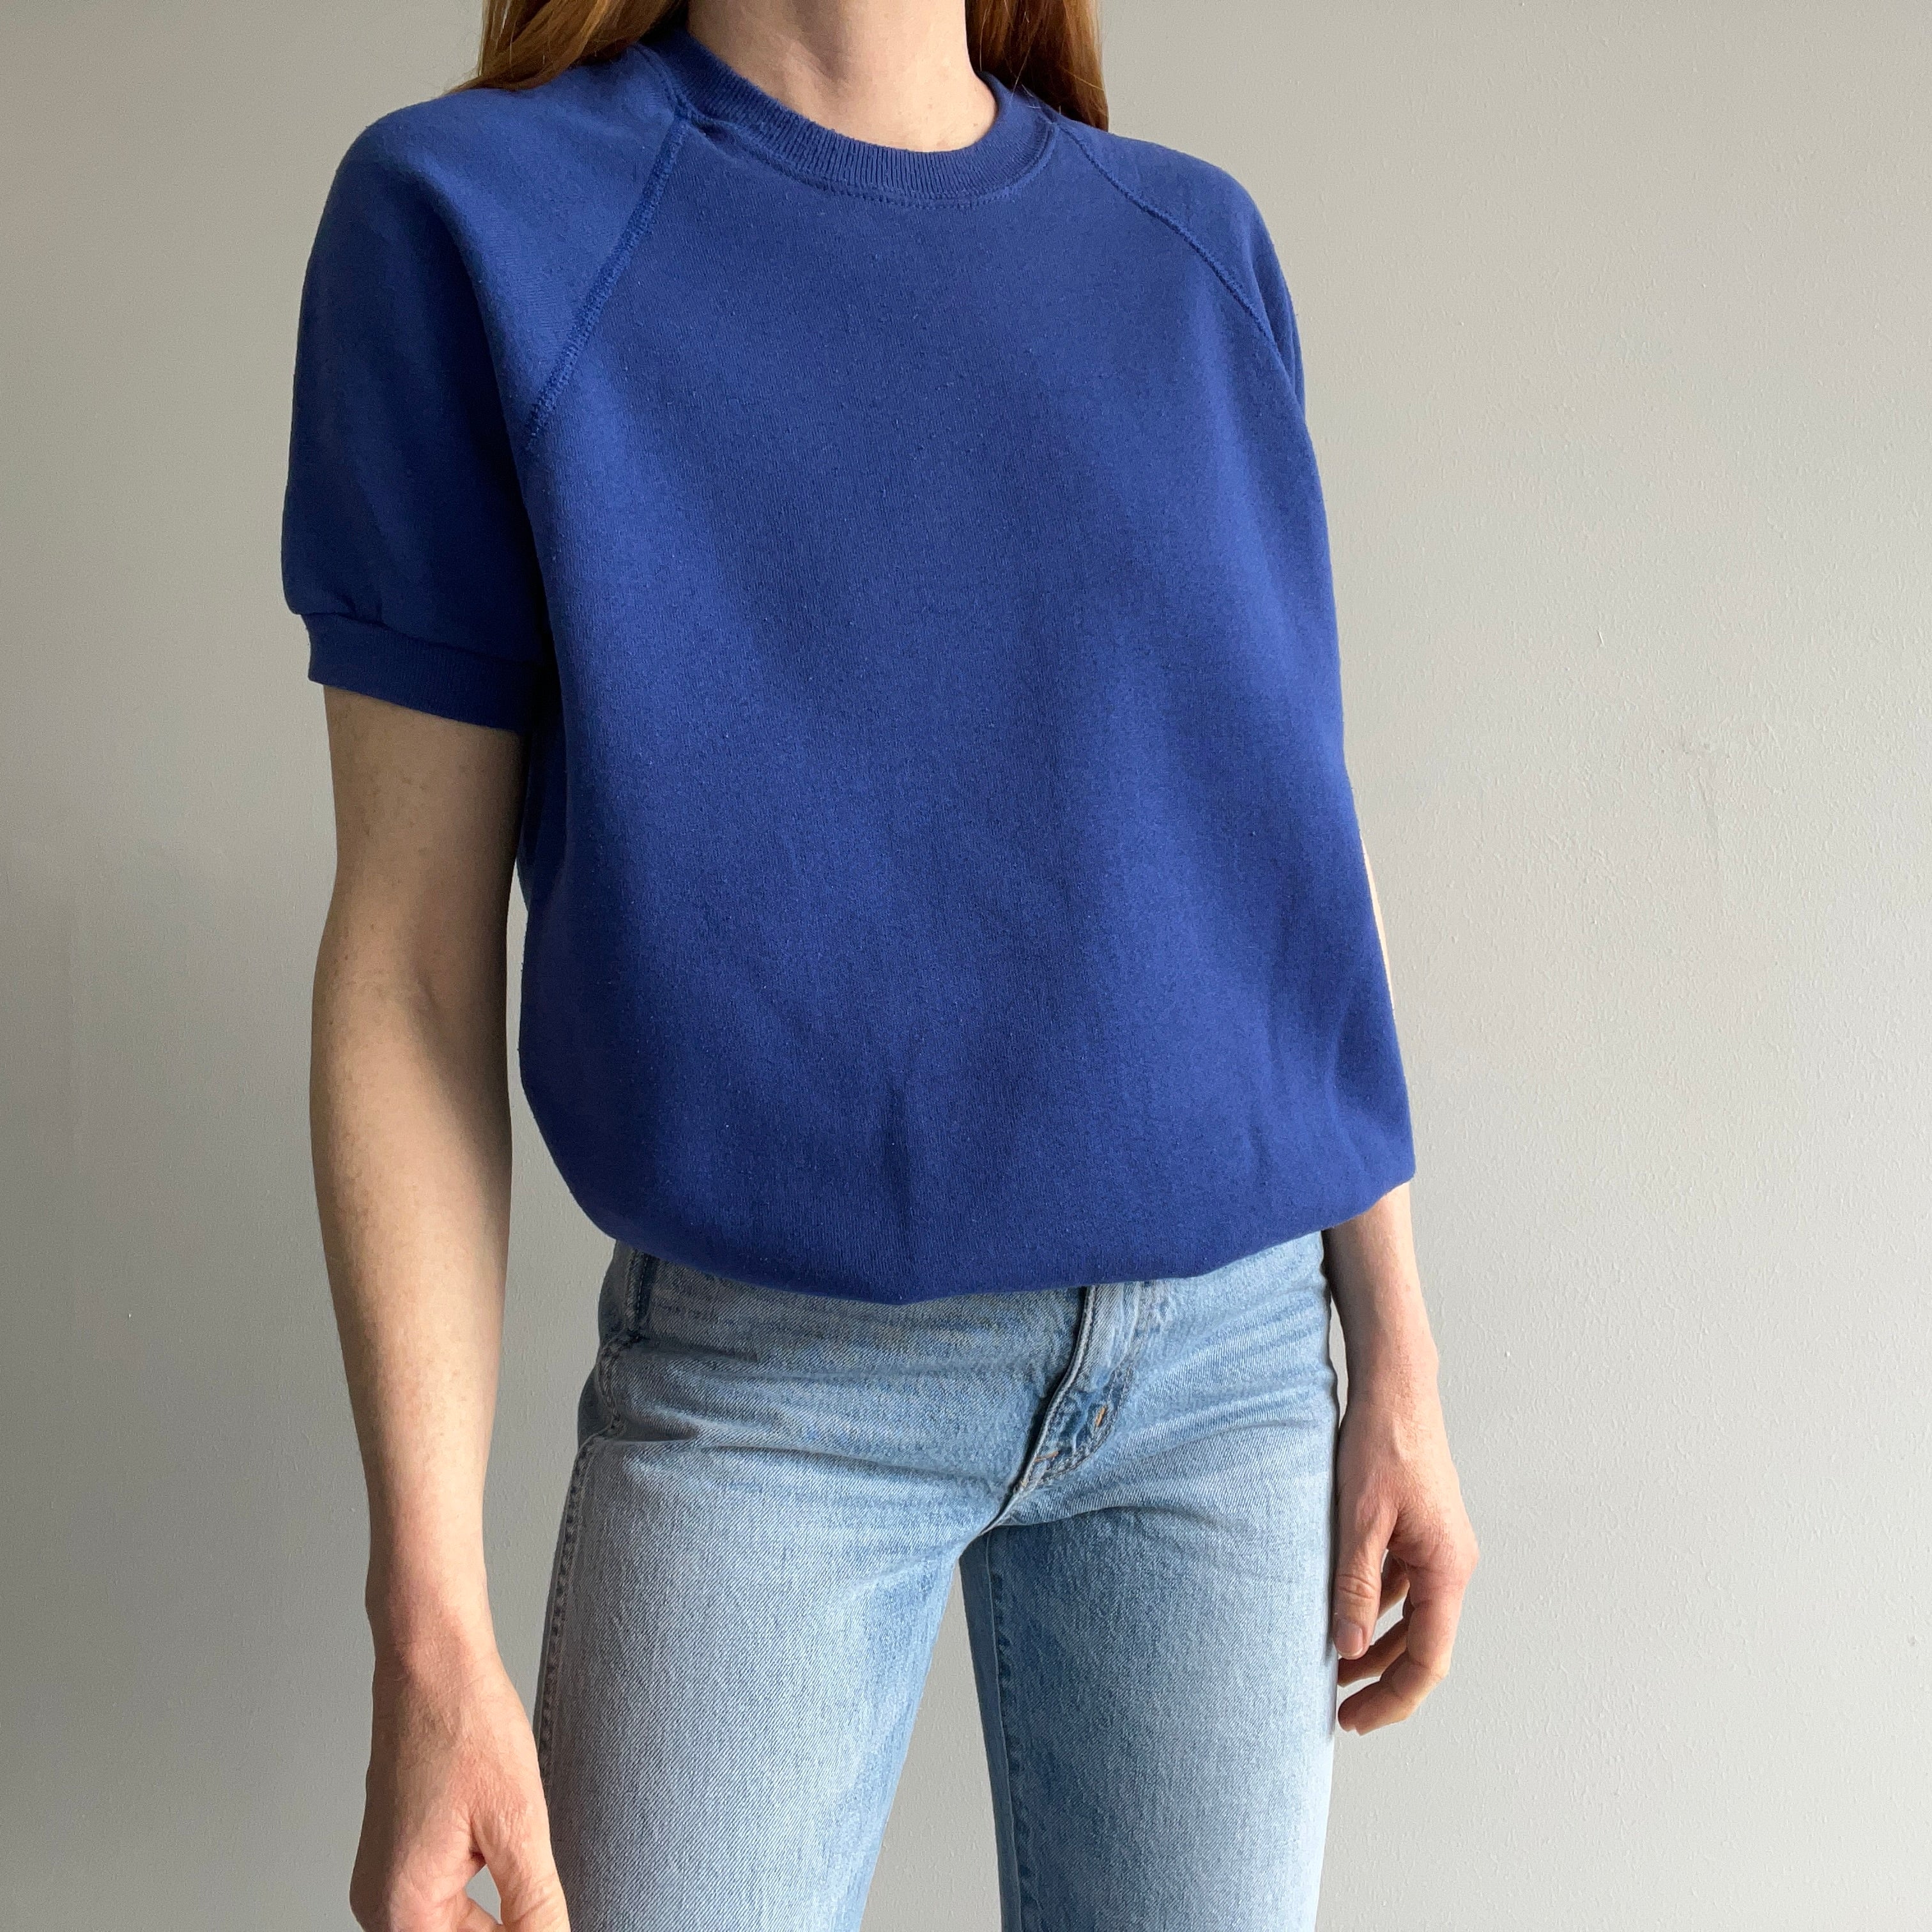 1980s Blank Blue Warm Up Sweatshirt